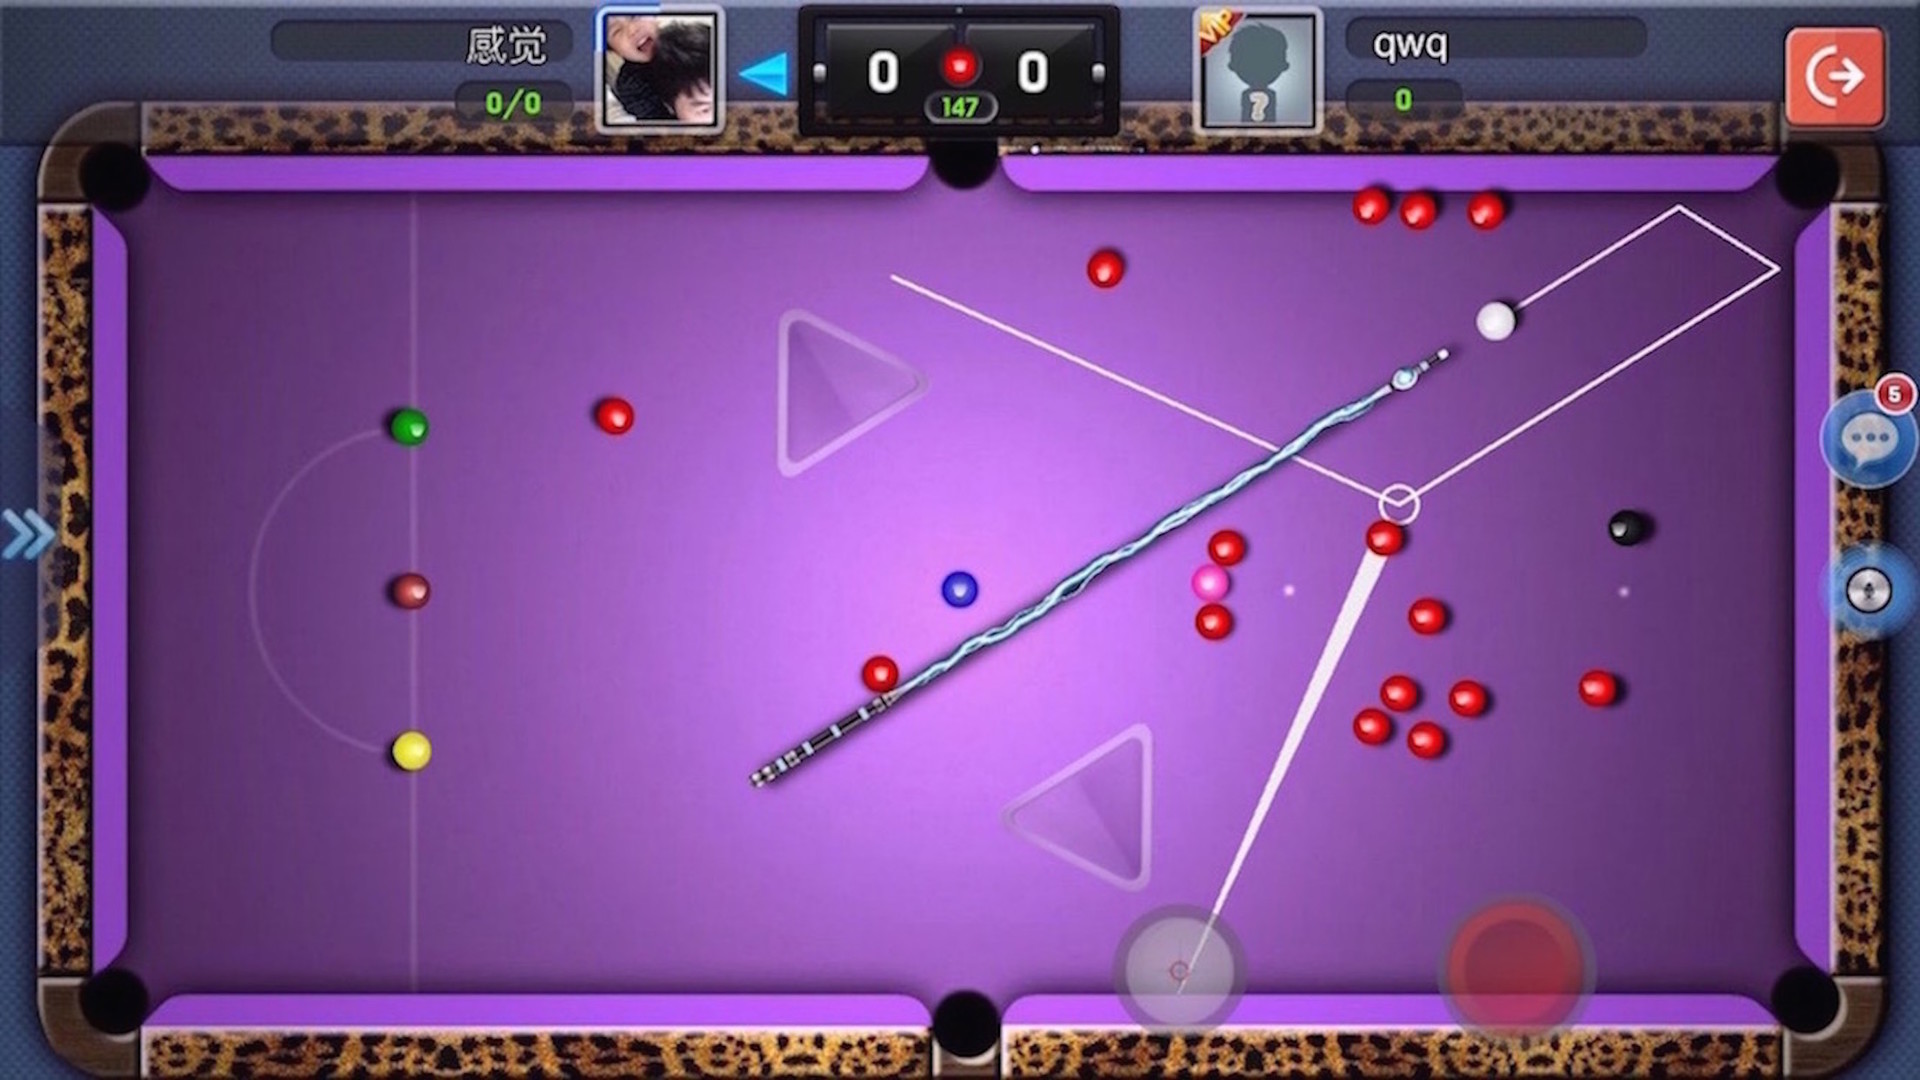 Snooker-online multiplayer snooker game! bei Steam